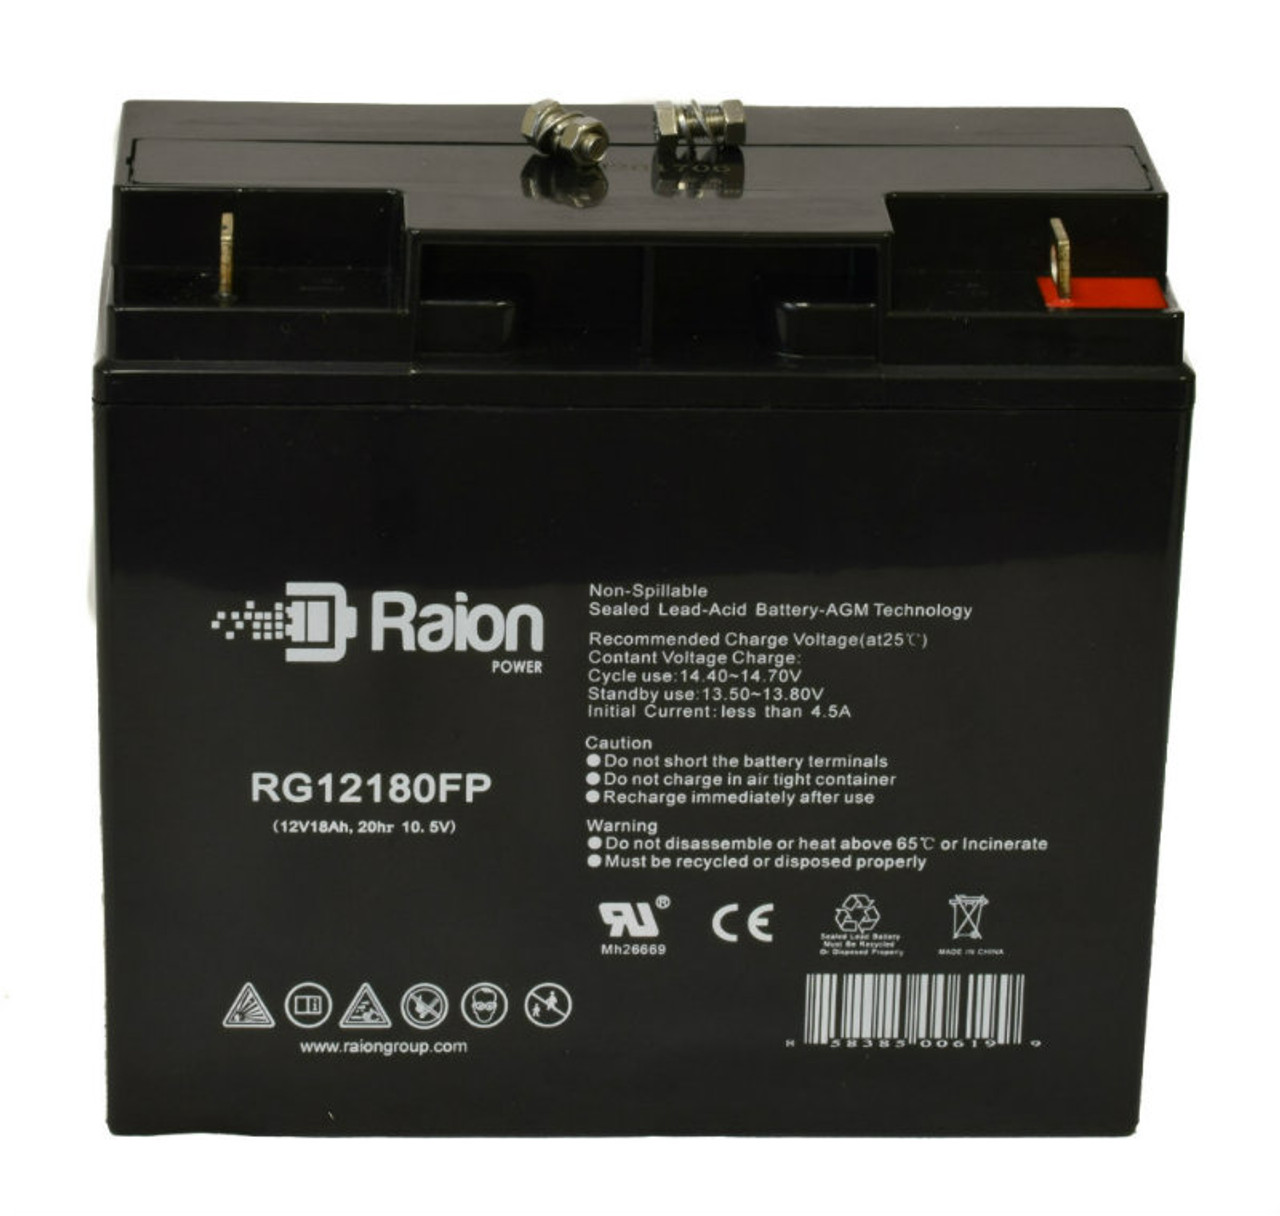 Raion Power RG12180FP 12V 18Ah Lead Acid Battery for Datascope CS100 Intra-Aortic Balloon Pump